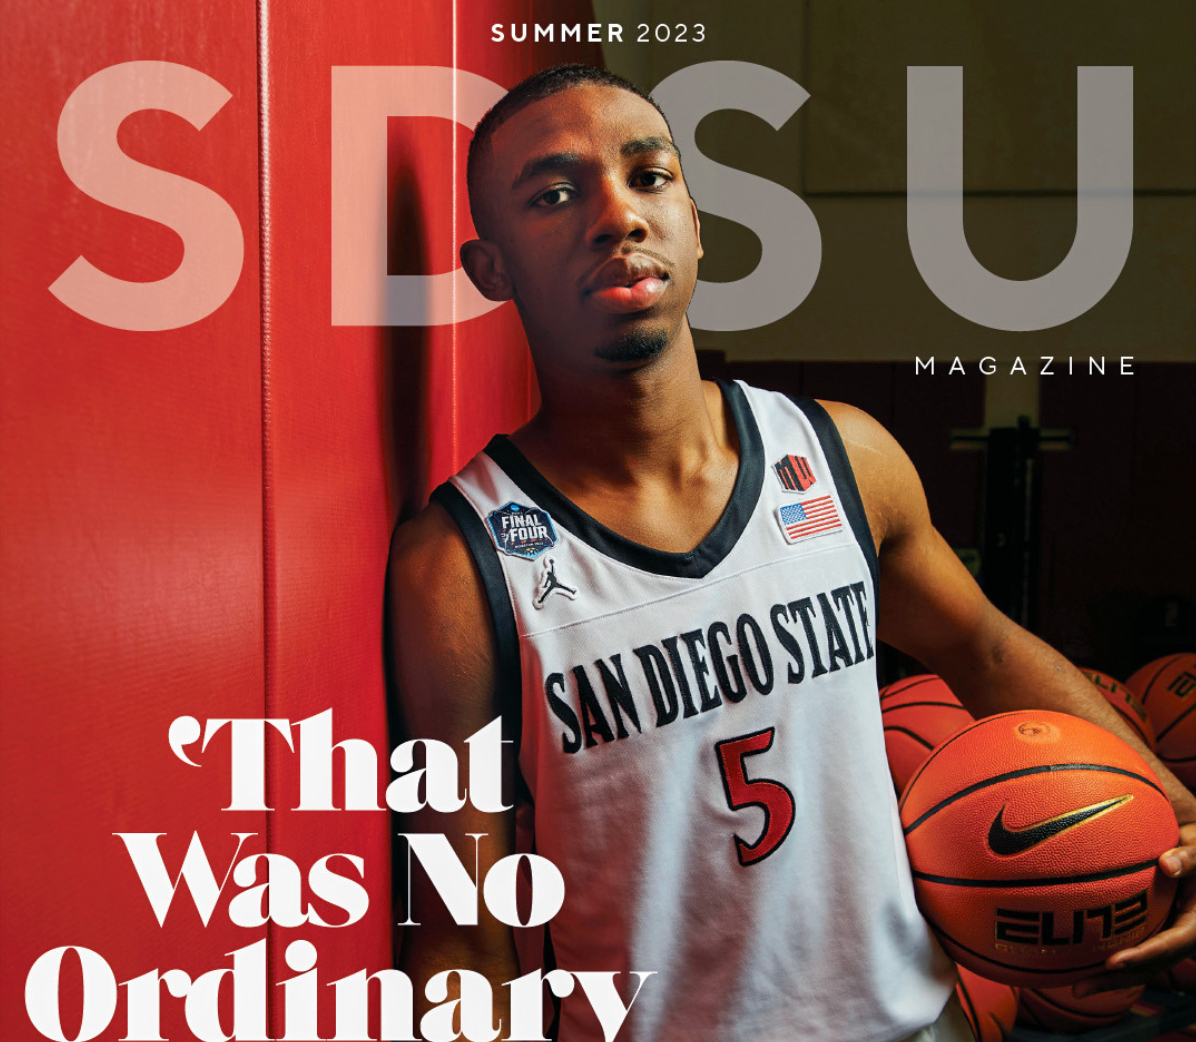 Cover of spring 2022 issue of SDSU Magazine